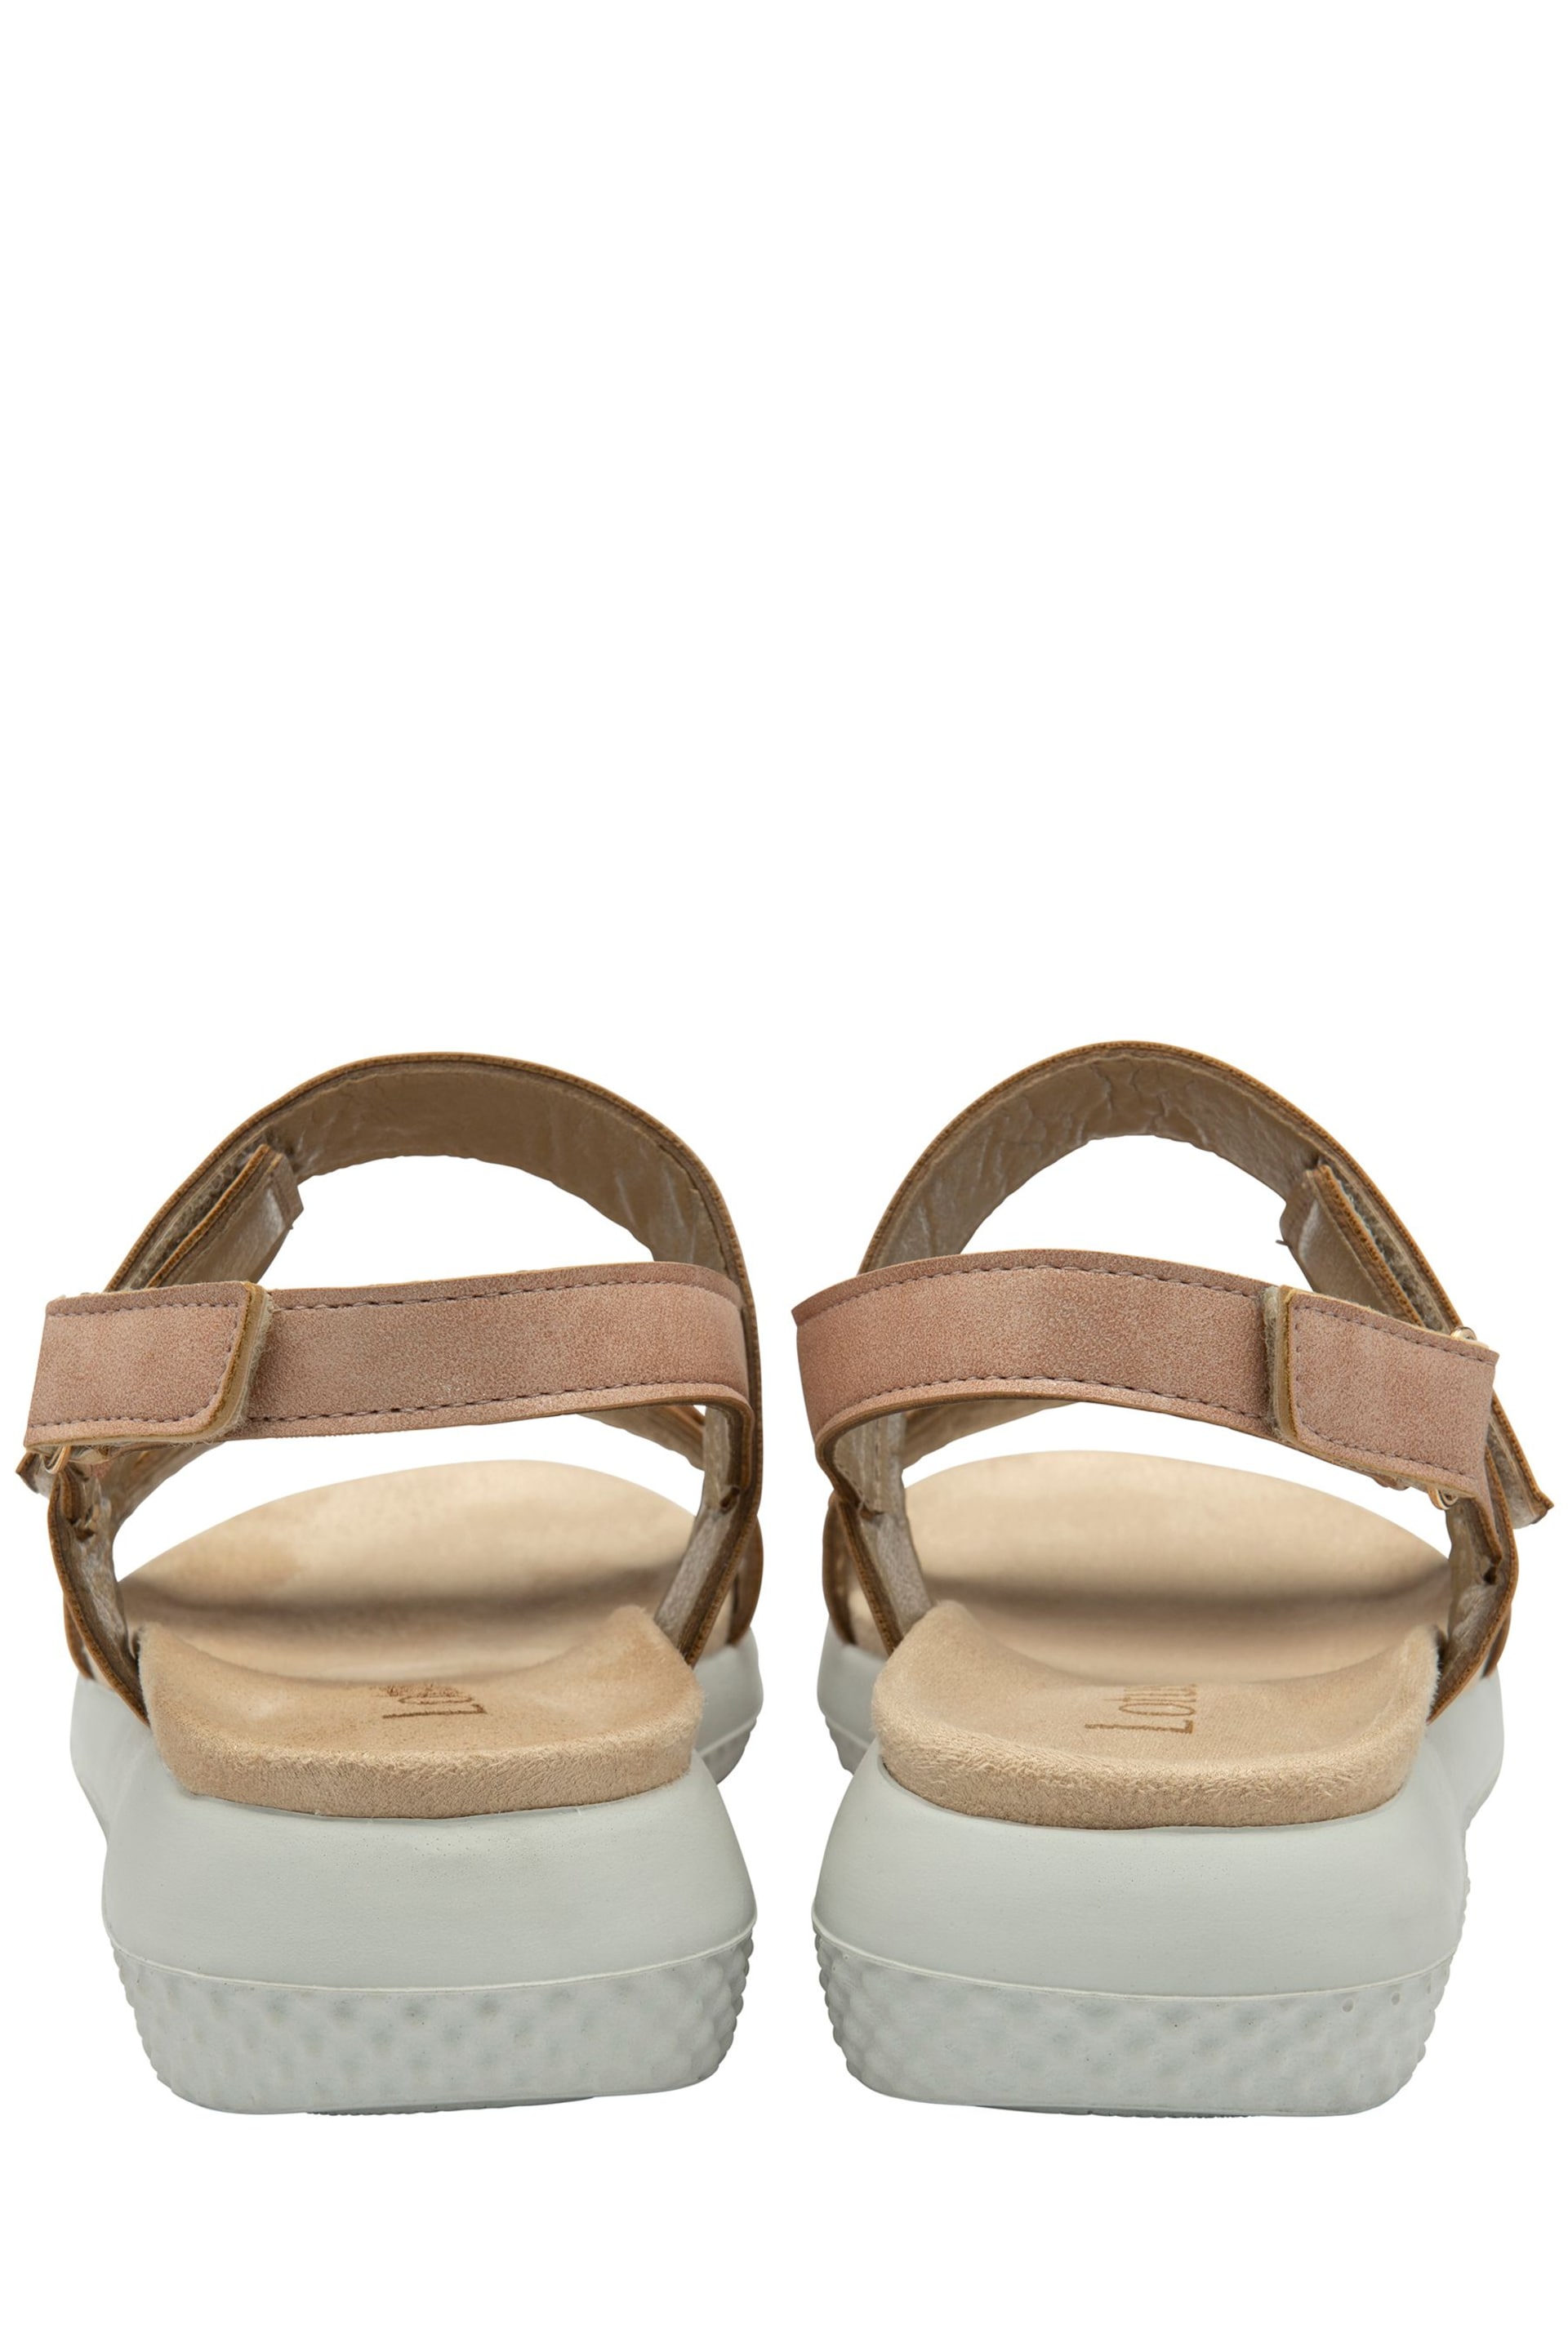 Lotus Brown Slingback Sandals - Image 3 of 4